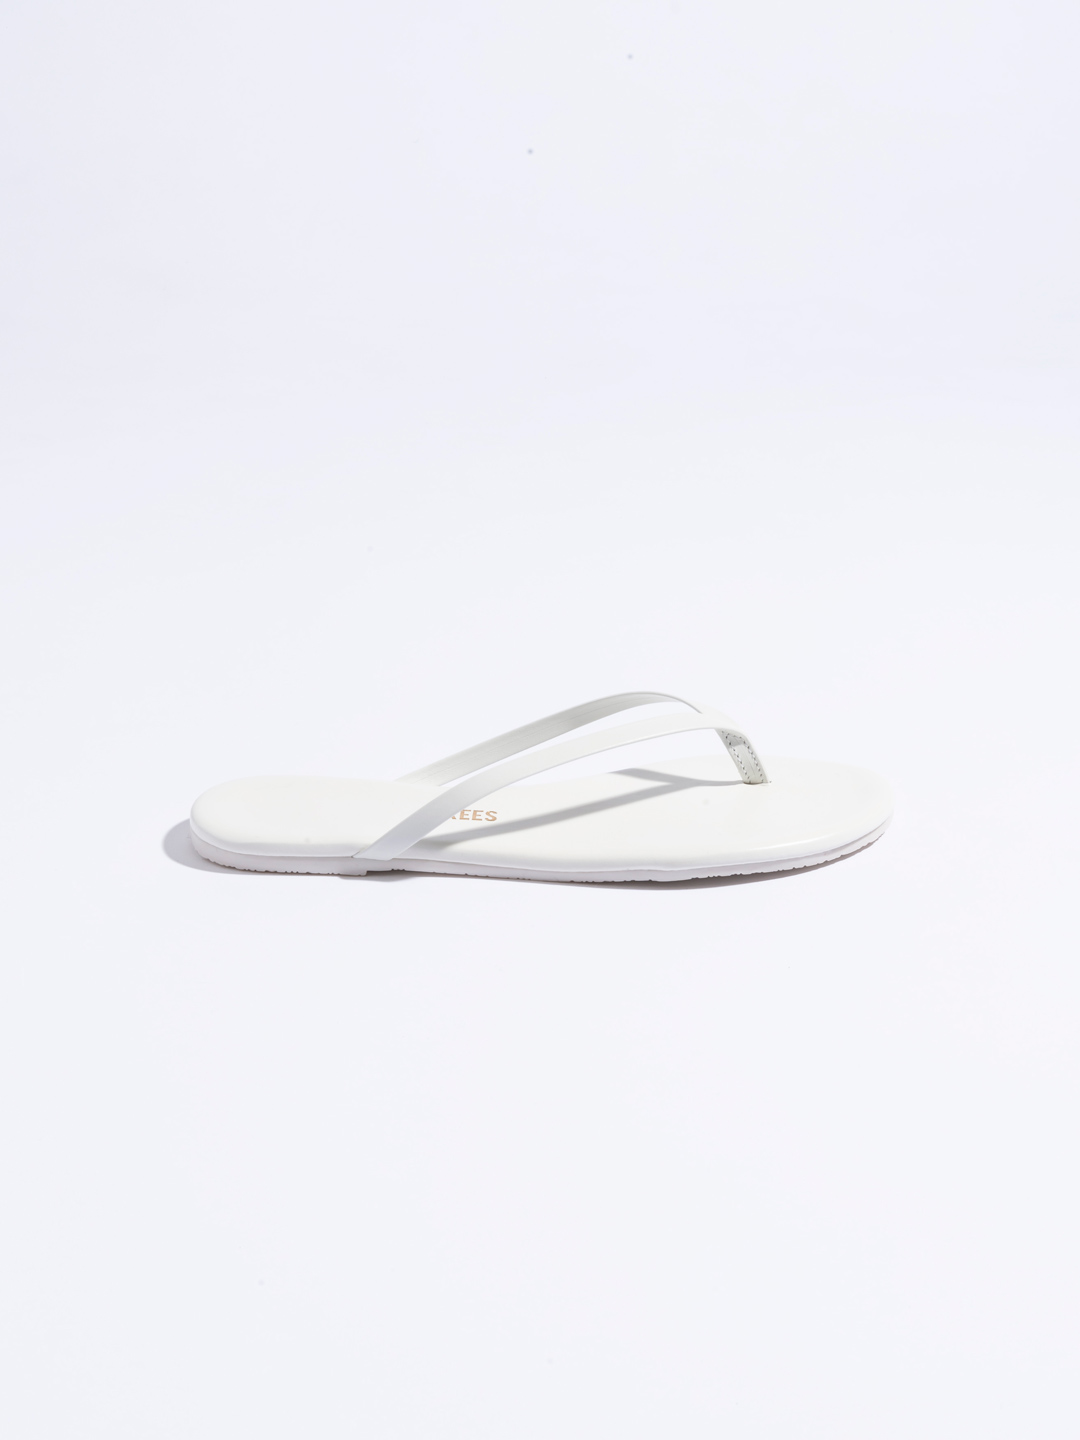 Most Loved Signature Flip Flop Sandals - White